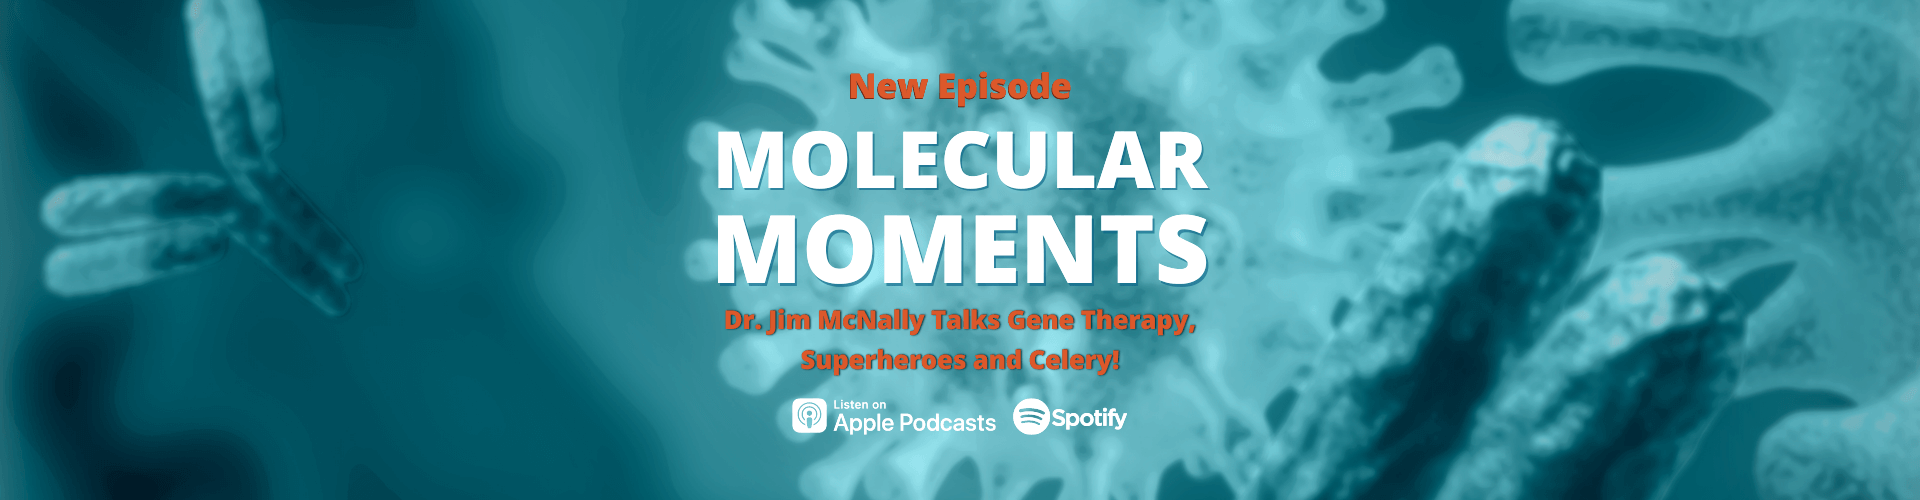 jim mcnally molecular moments podcast episode